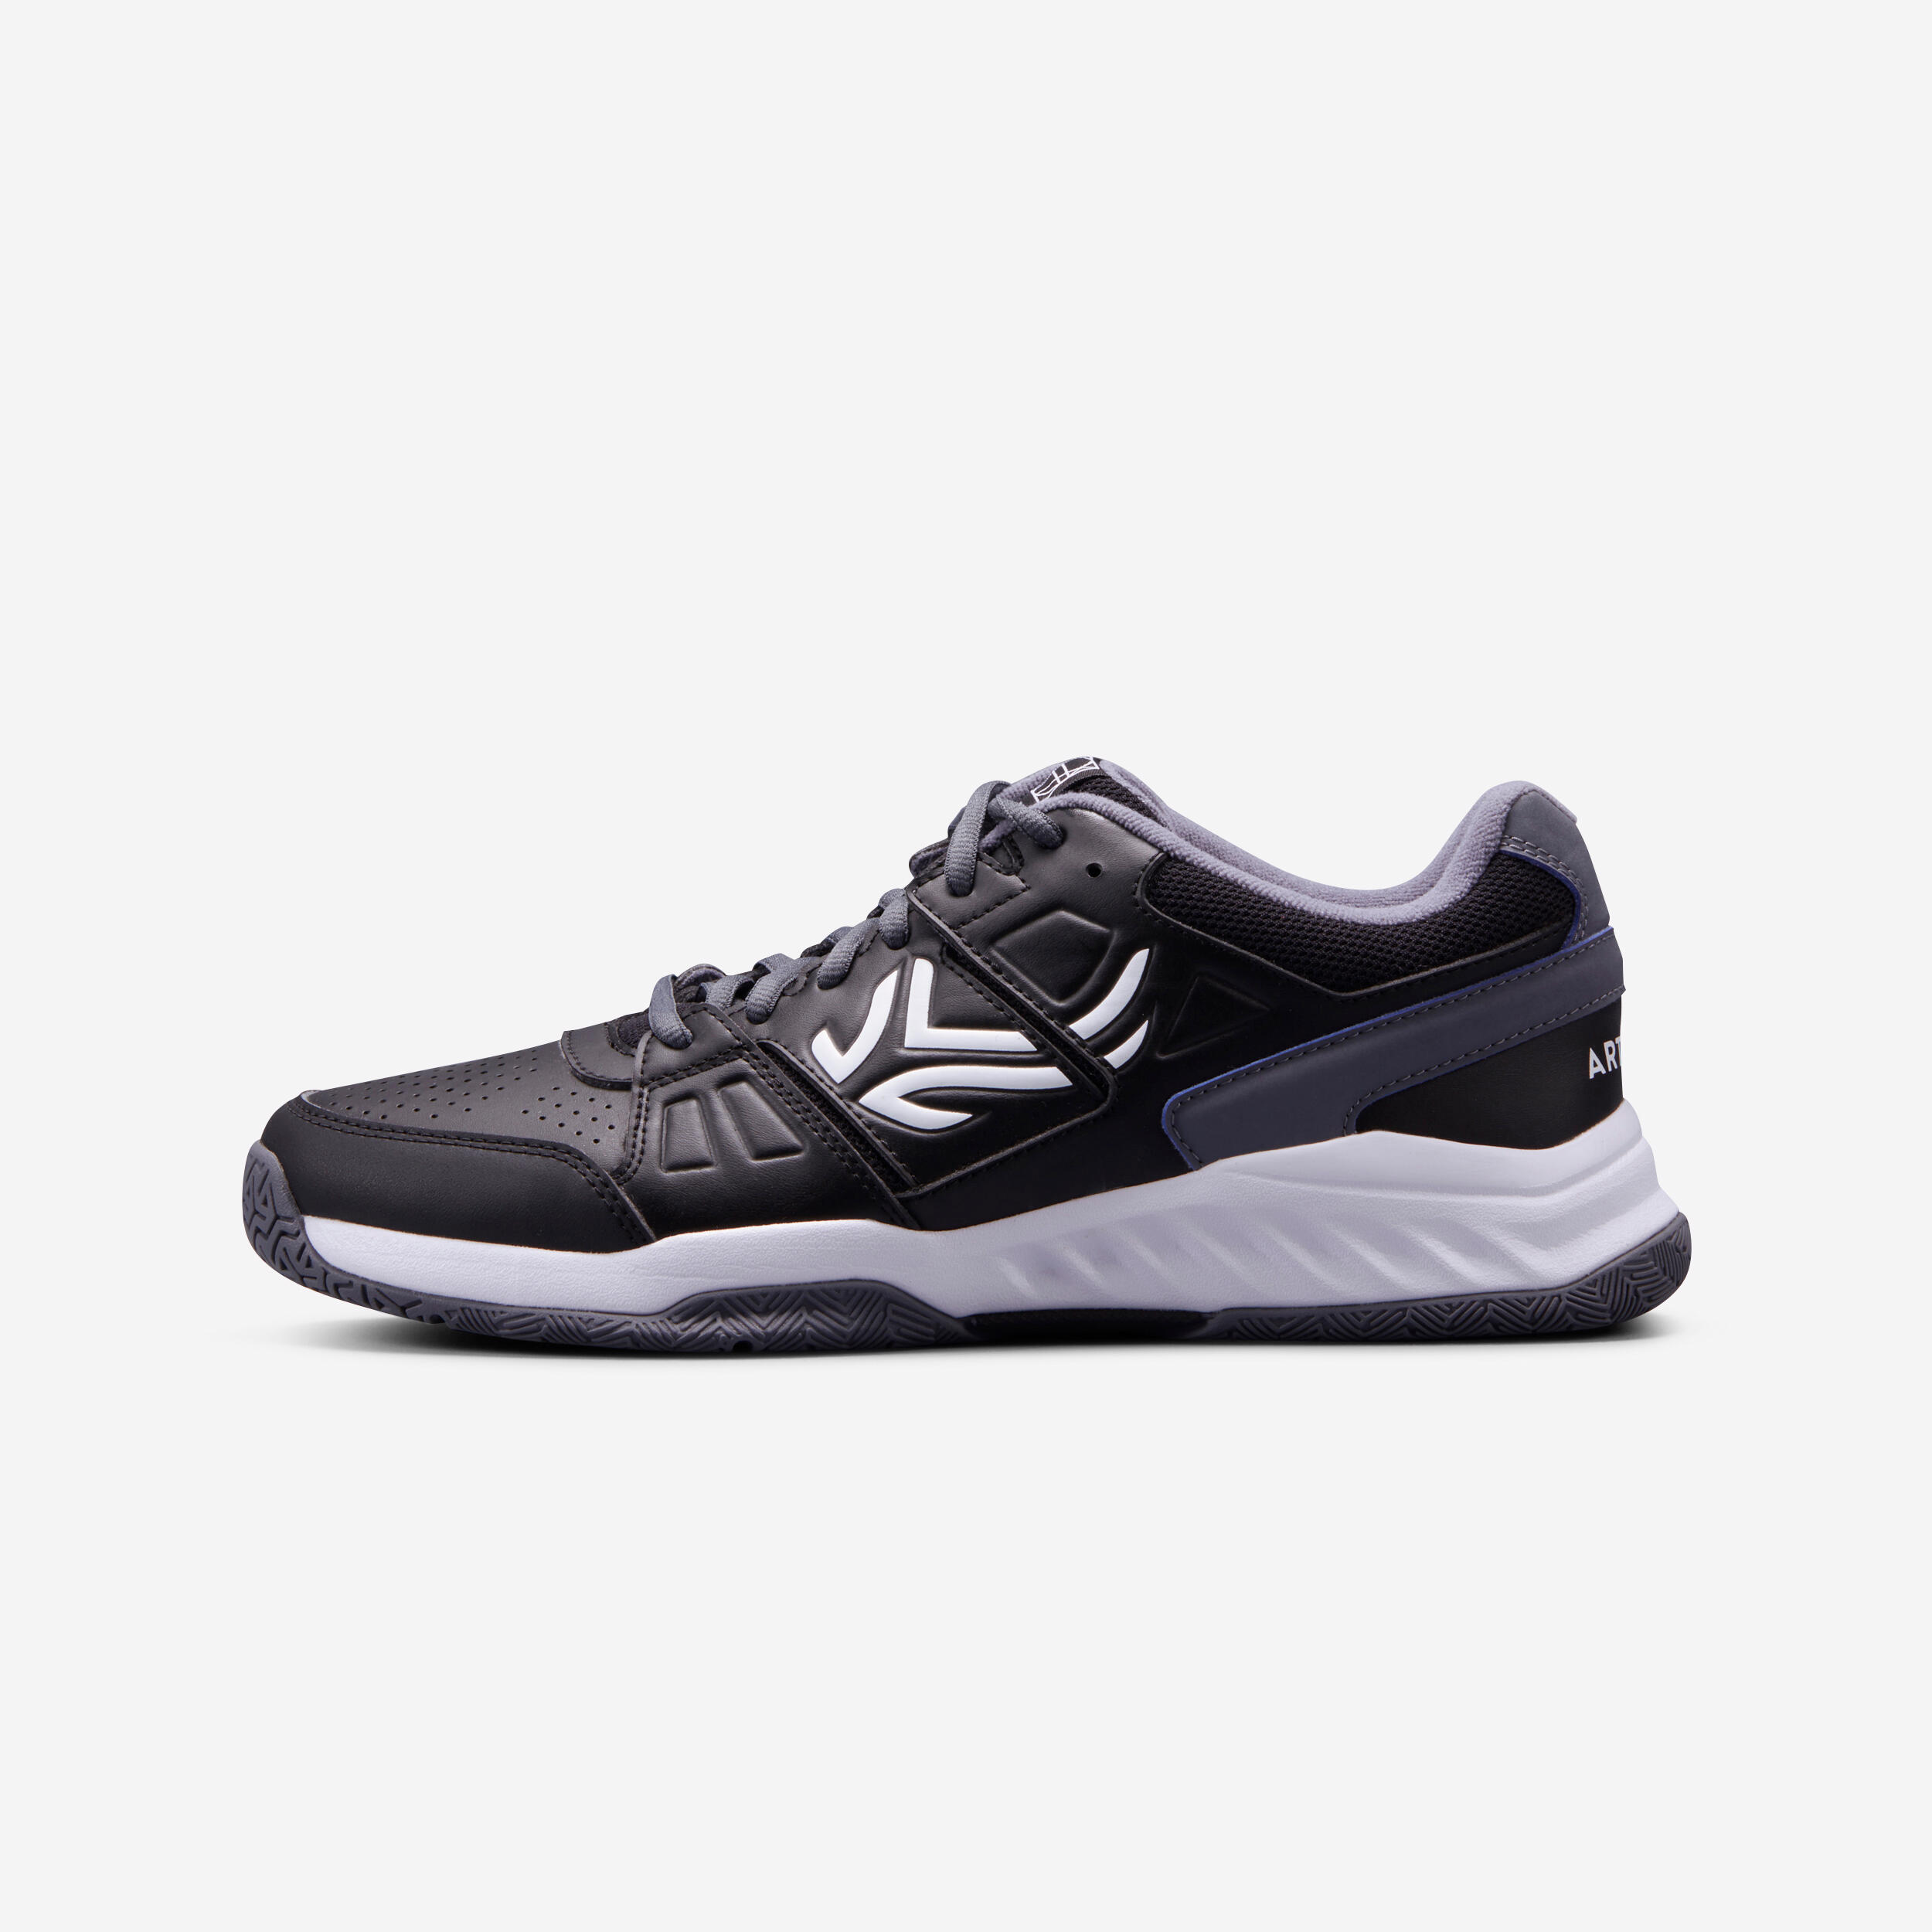 Image of TS160 Multi-Court Tennis Shoes - Black